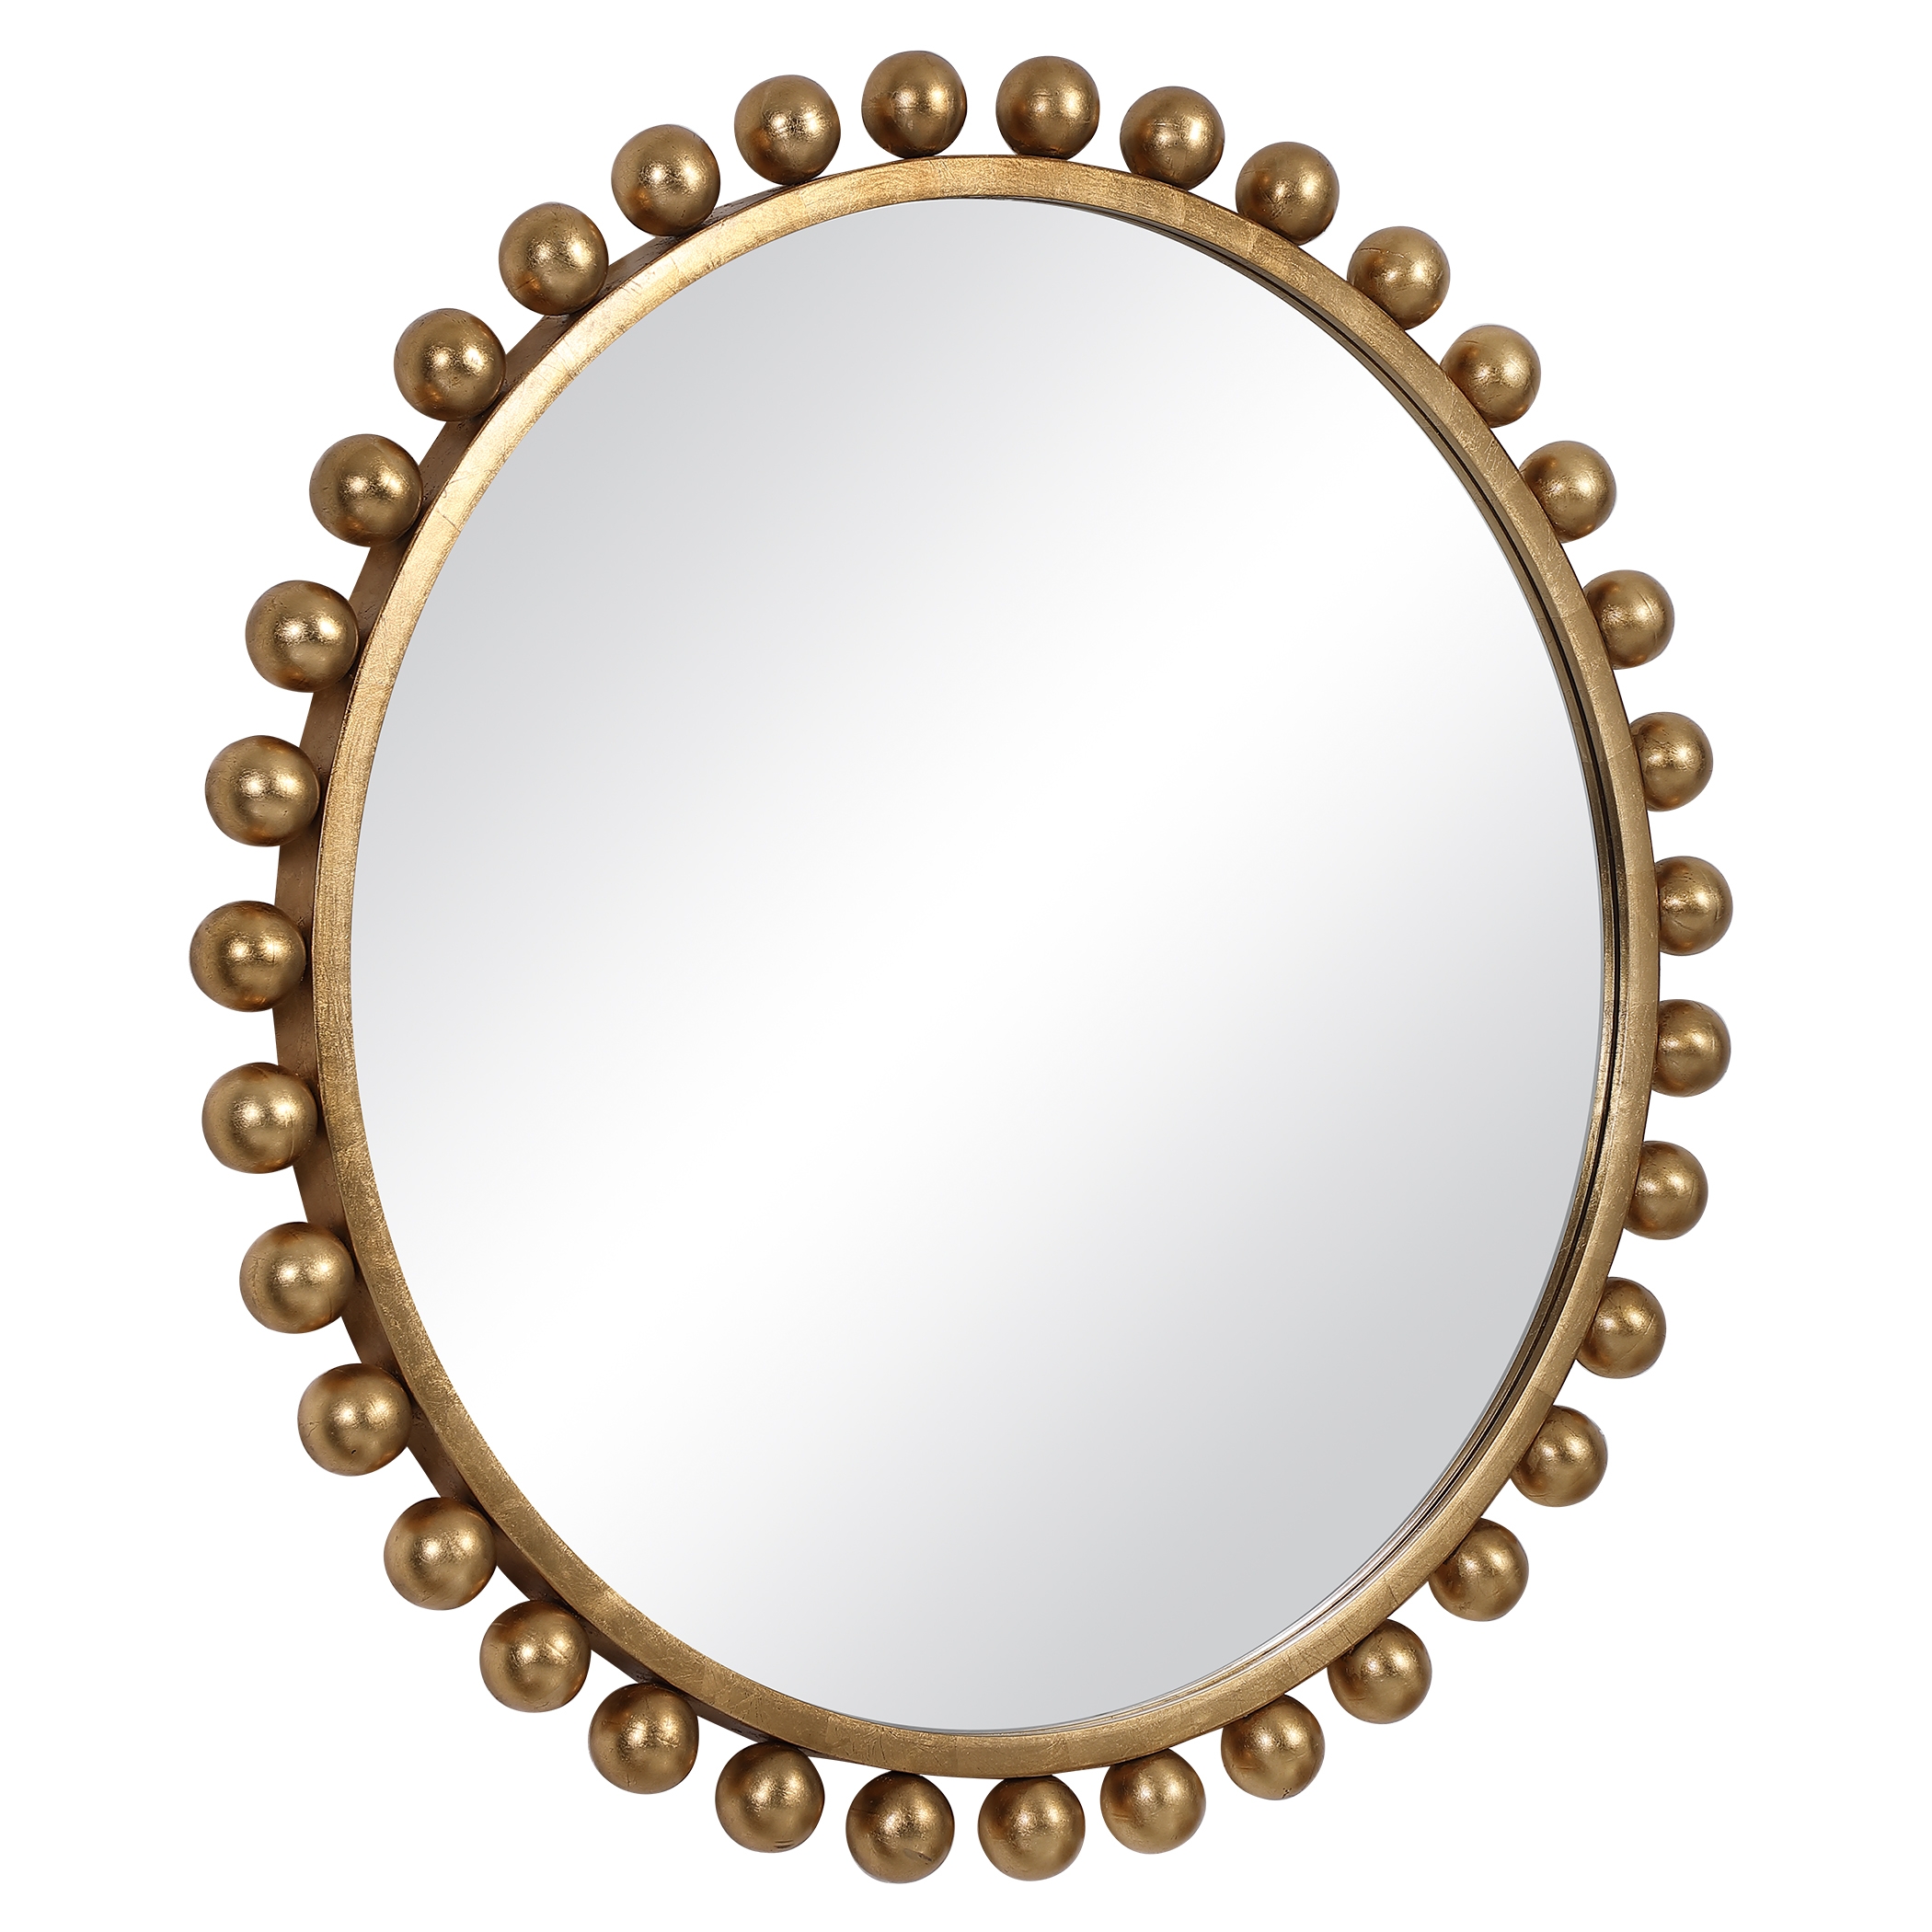 Cyra Round Mirror, Gold - Image 1